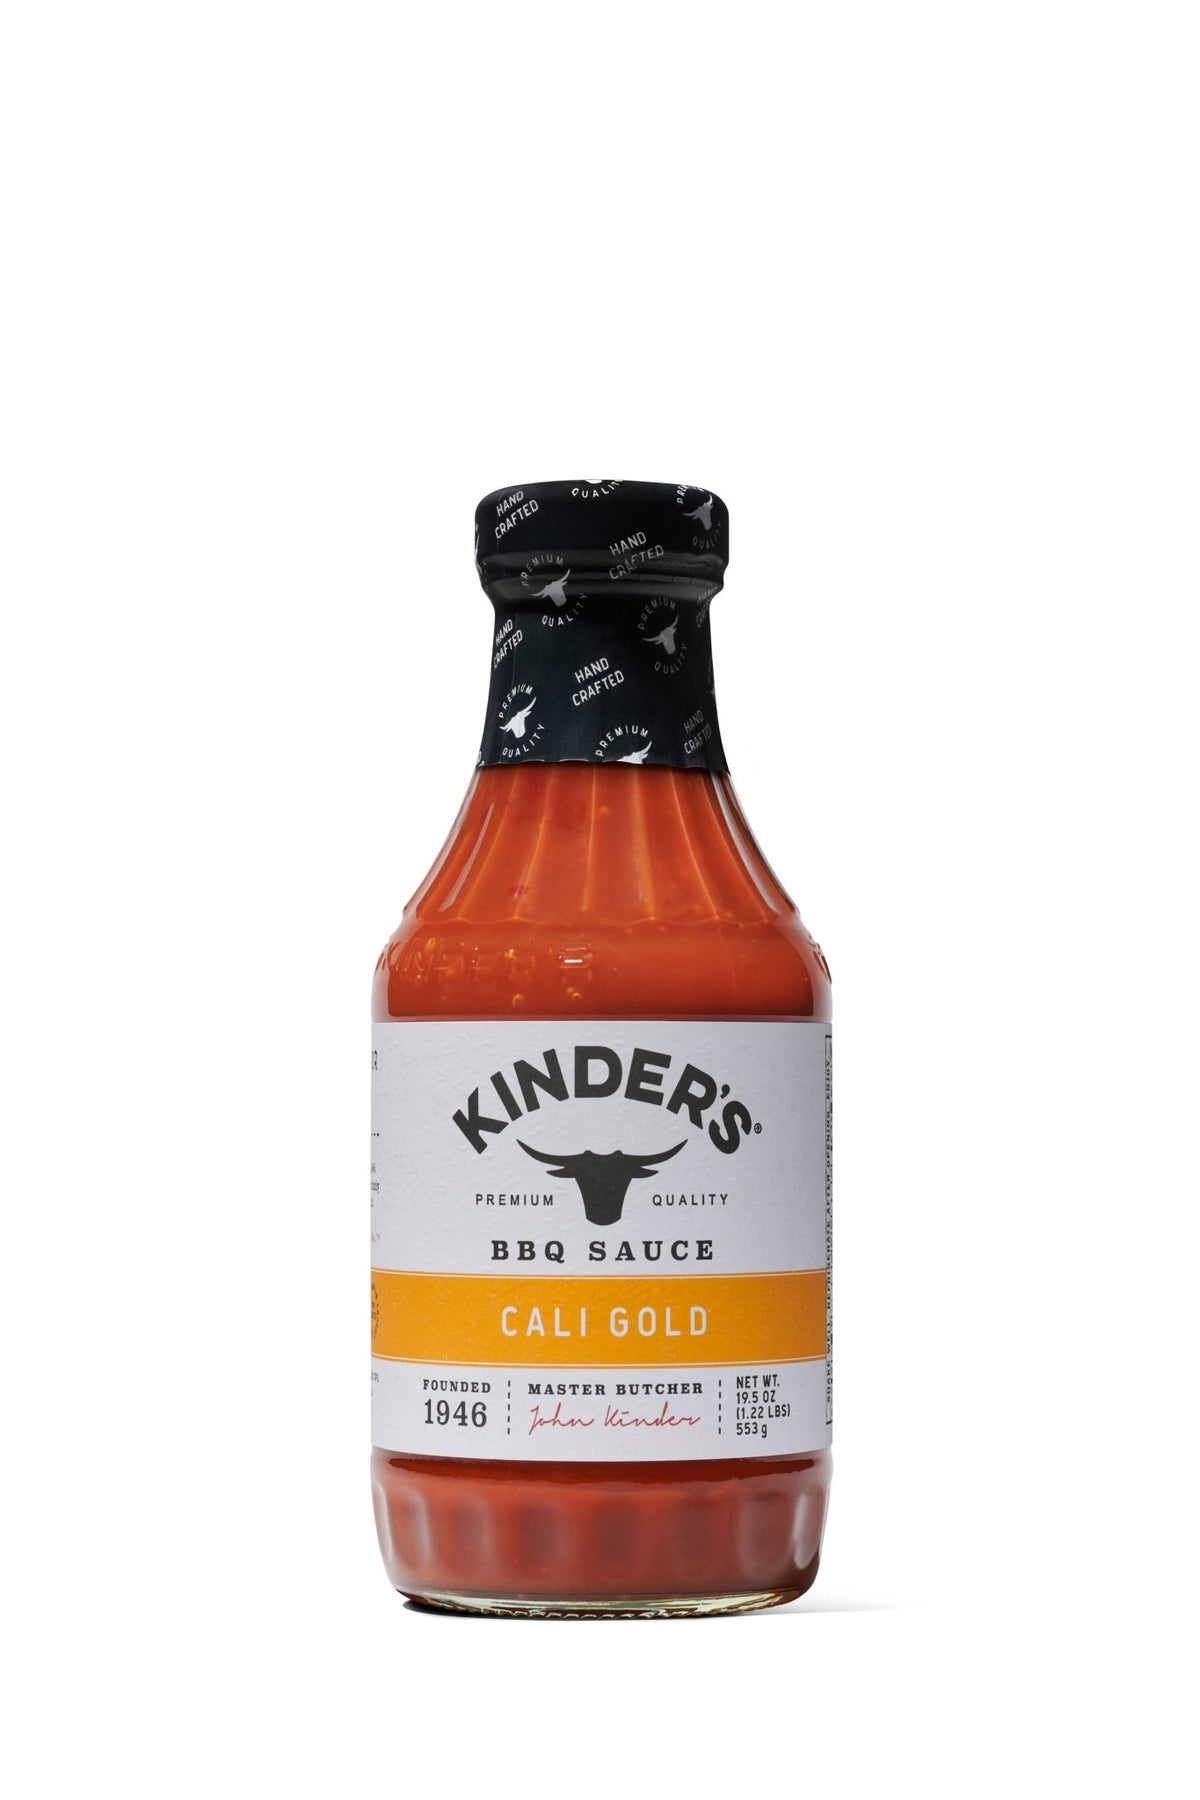 Kinder's Sauces & Seasonings - Cali Gold BBQ Sauce 19oz - Pacific Flyway Supplies